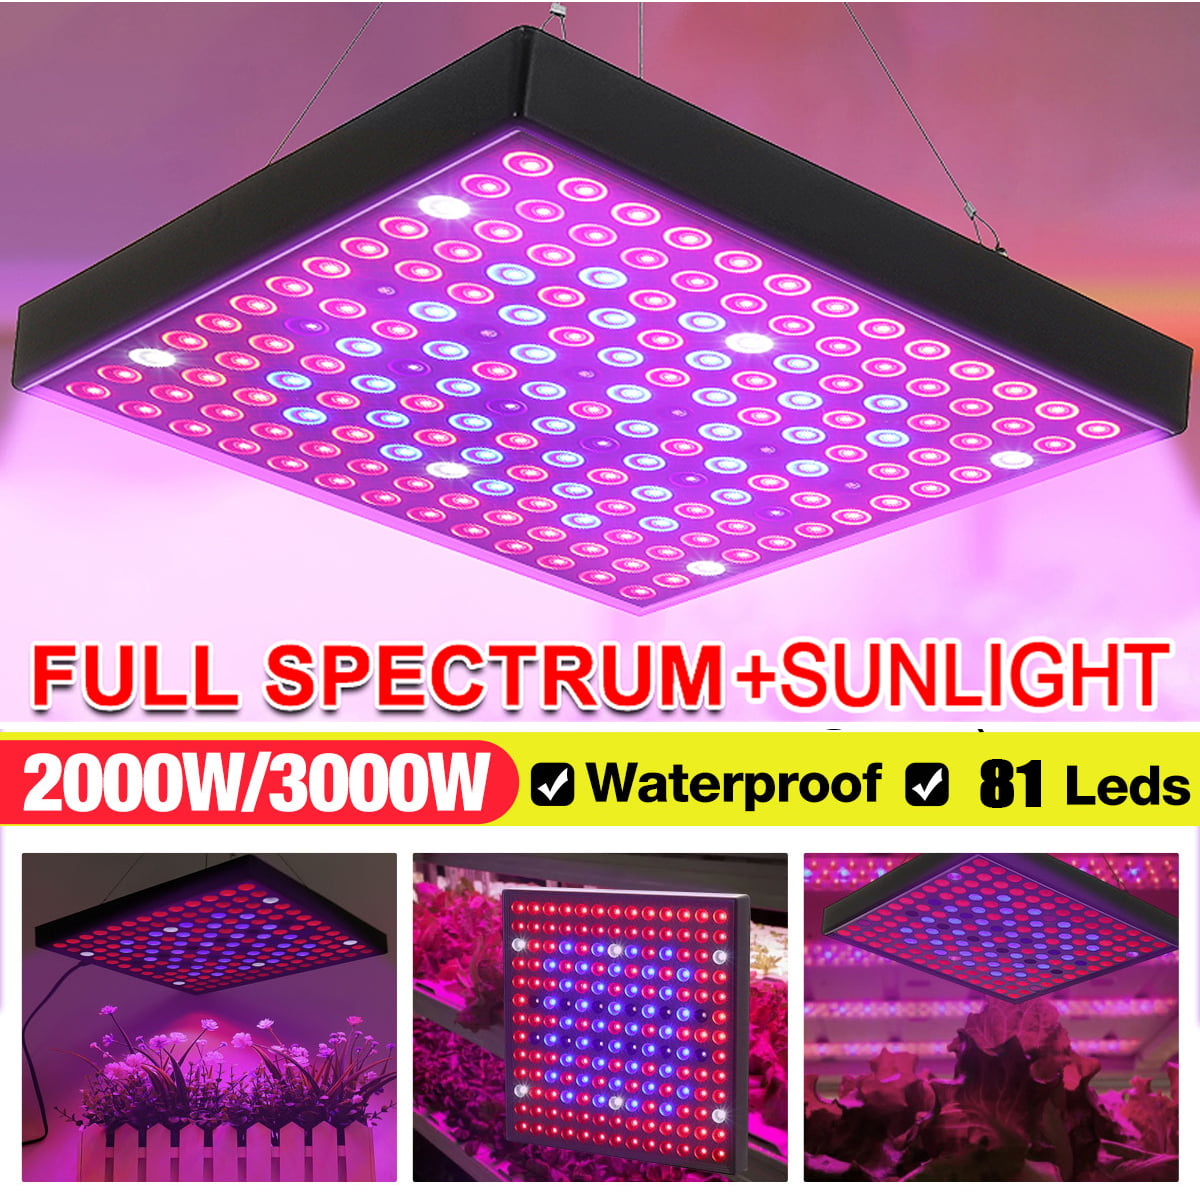 5000W LED Grow Light Hydroponic Full Spectrum Indoor Veg Flower Plant Lamp Panel 